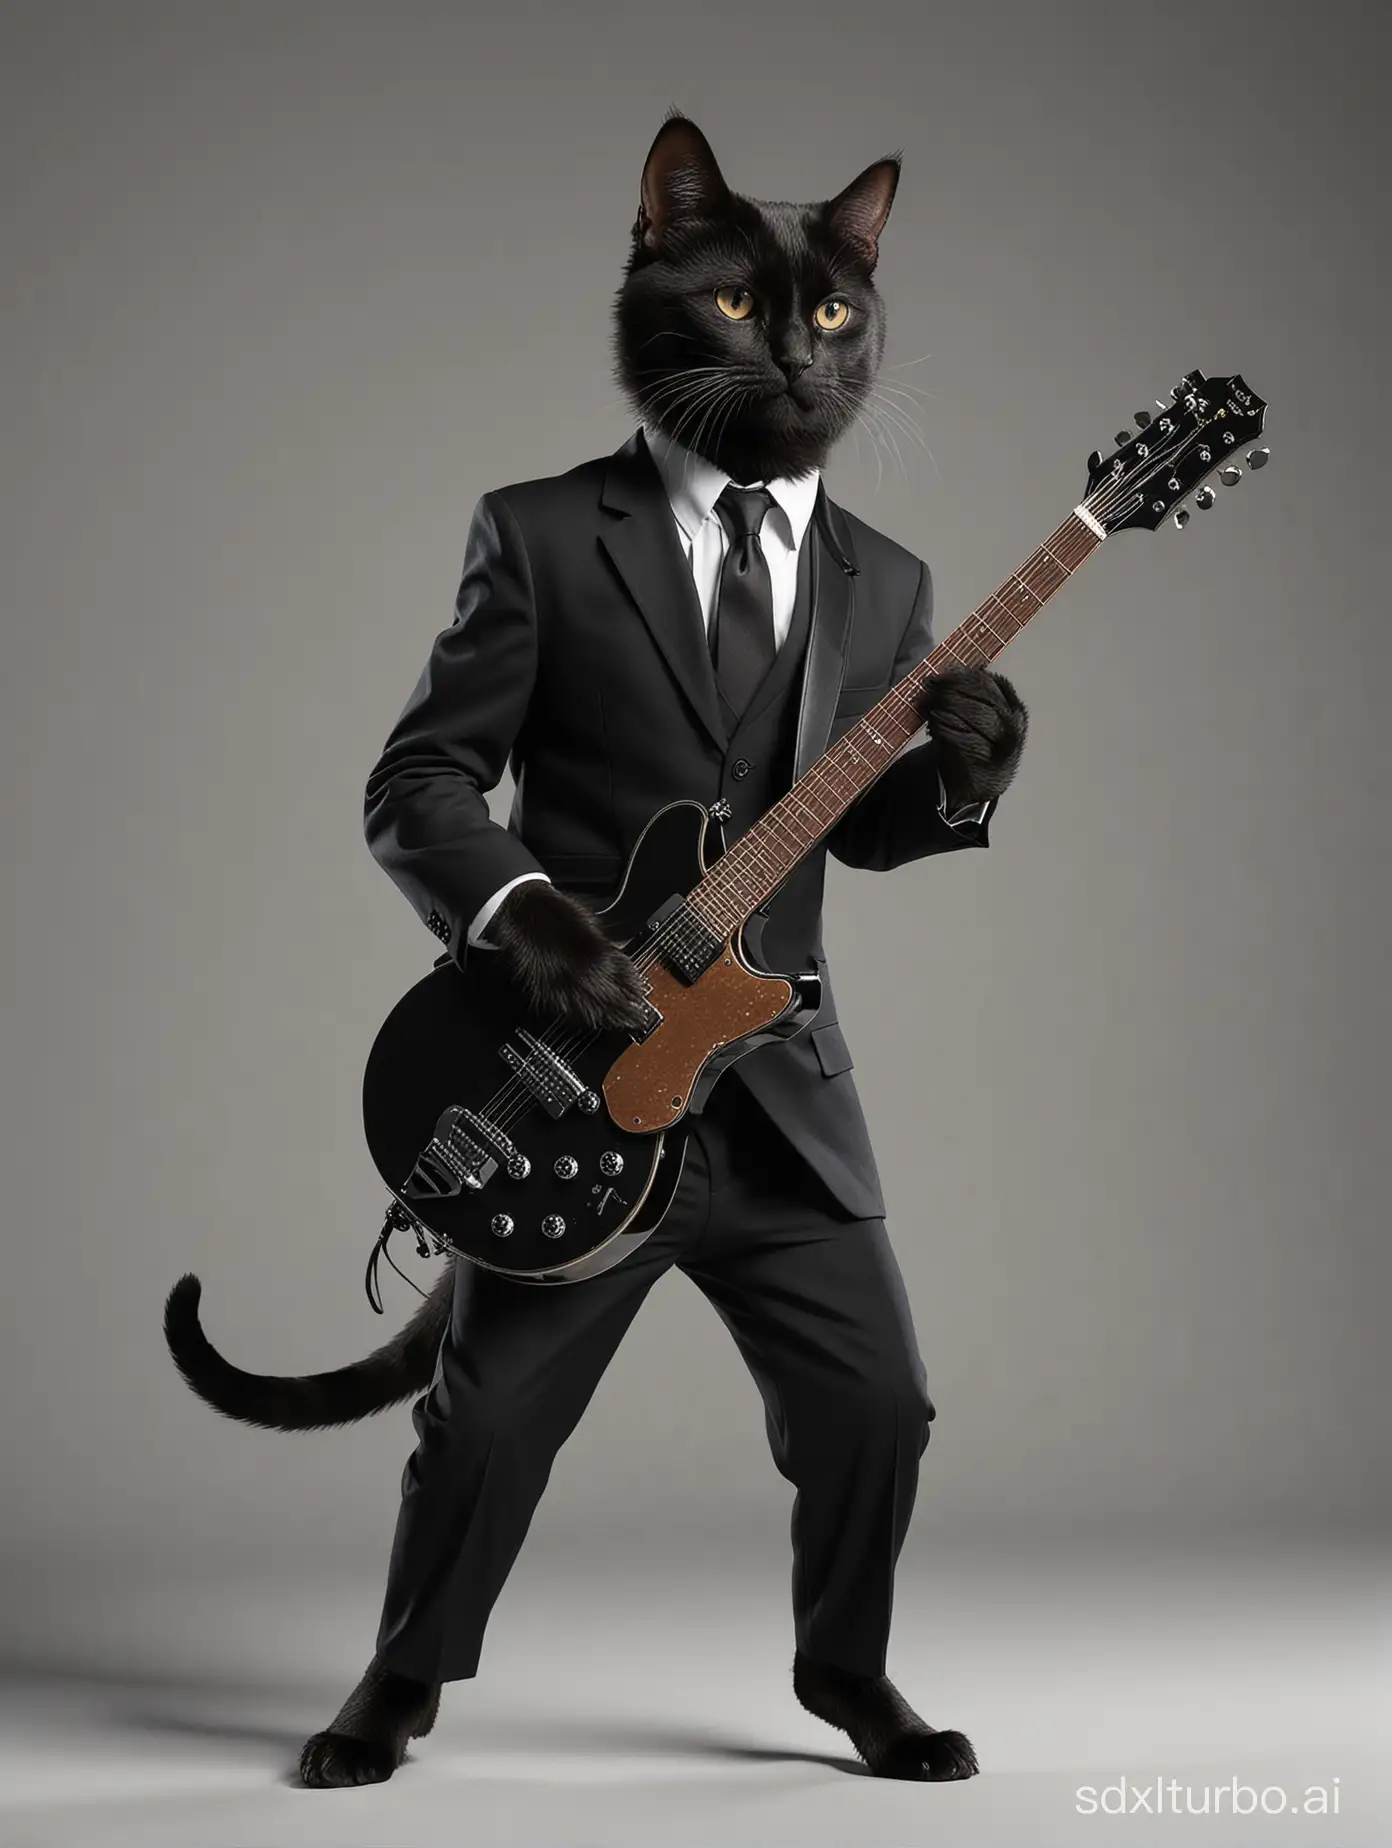 Sleek-Cat-Musician-in-Black-Suit-Plays-Smooth-Jazz-Guitar